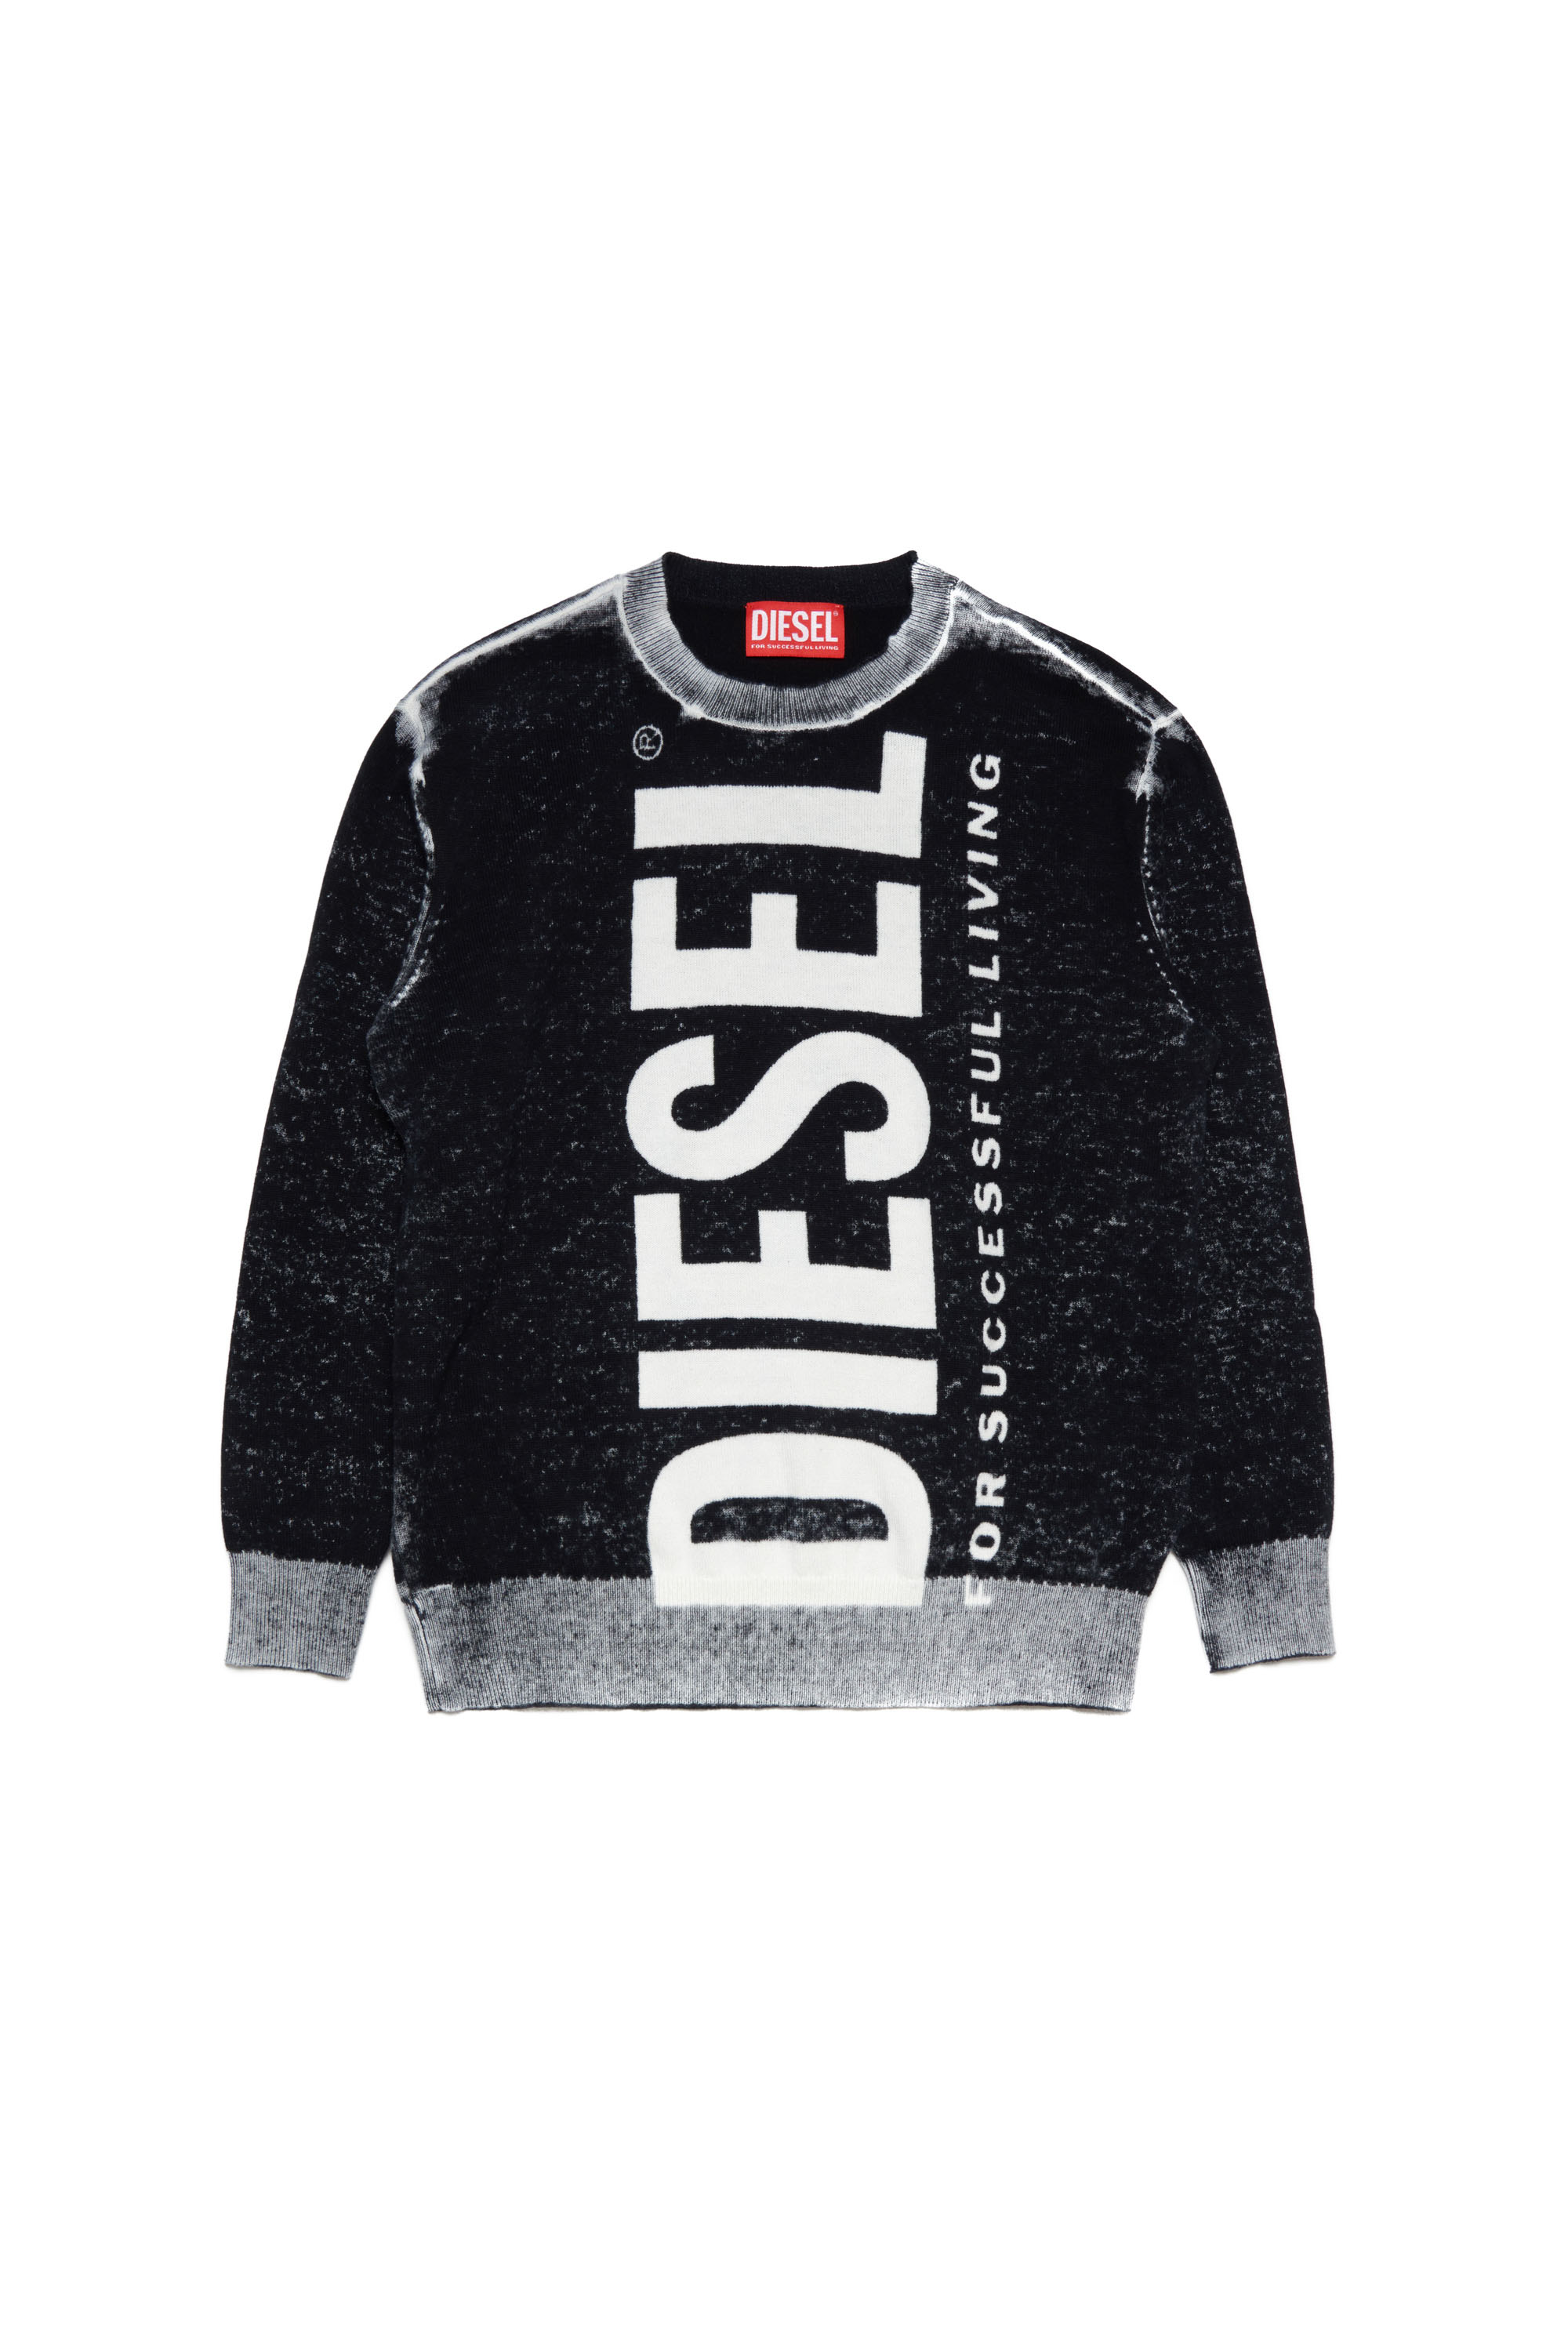 Diesel - KFLOW OVER, Man Knit sweater with Diesel lettering in Black - Image 1